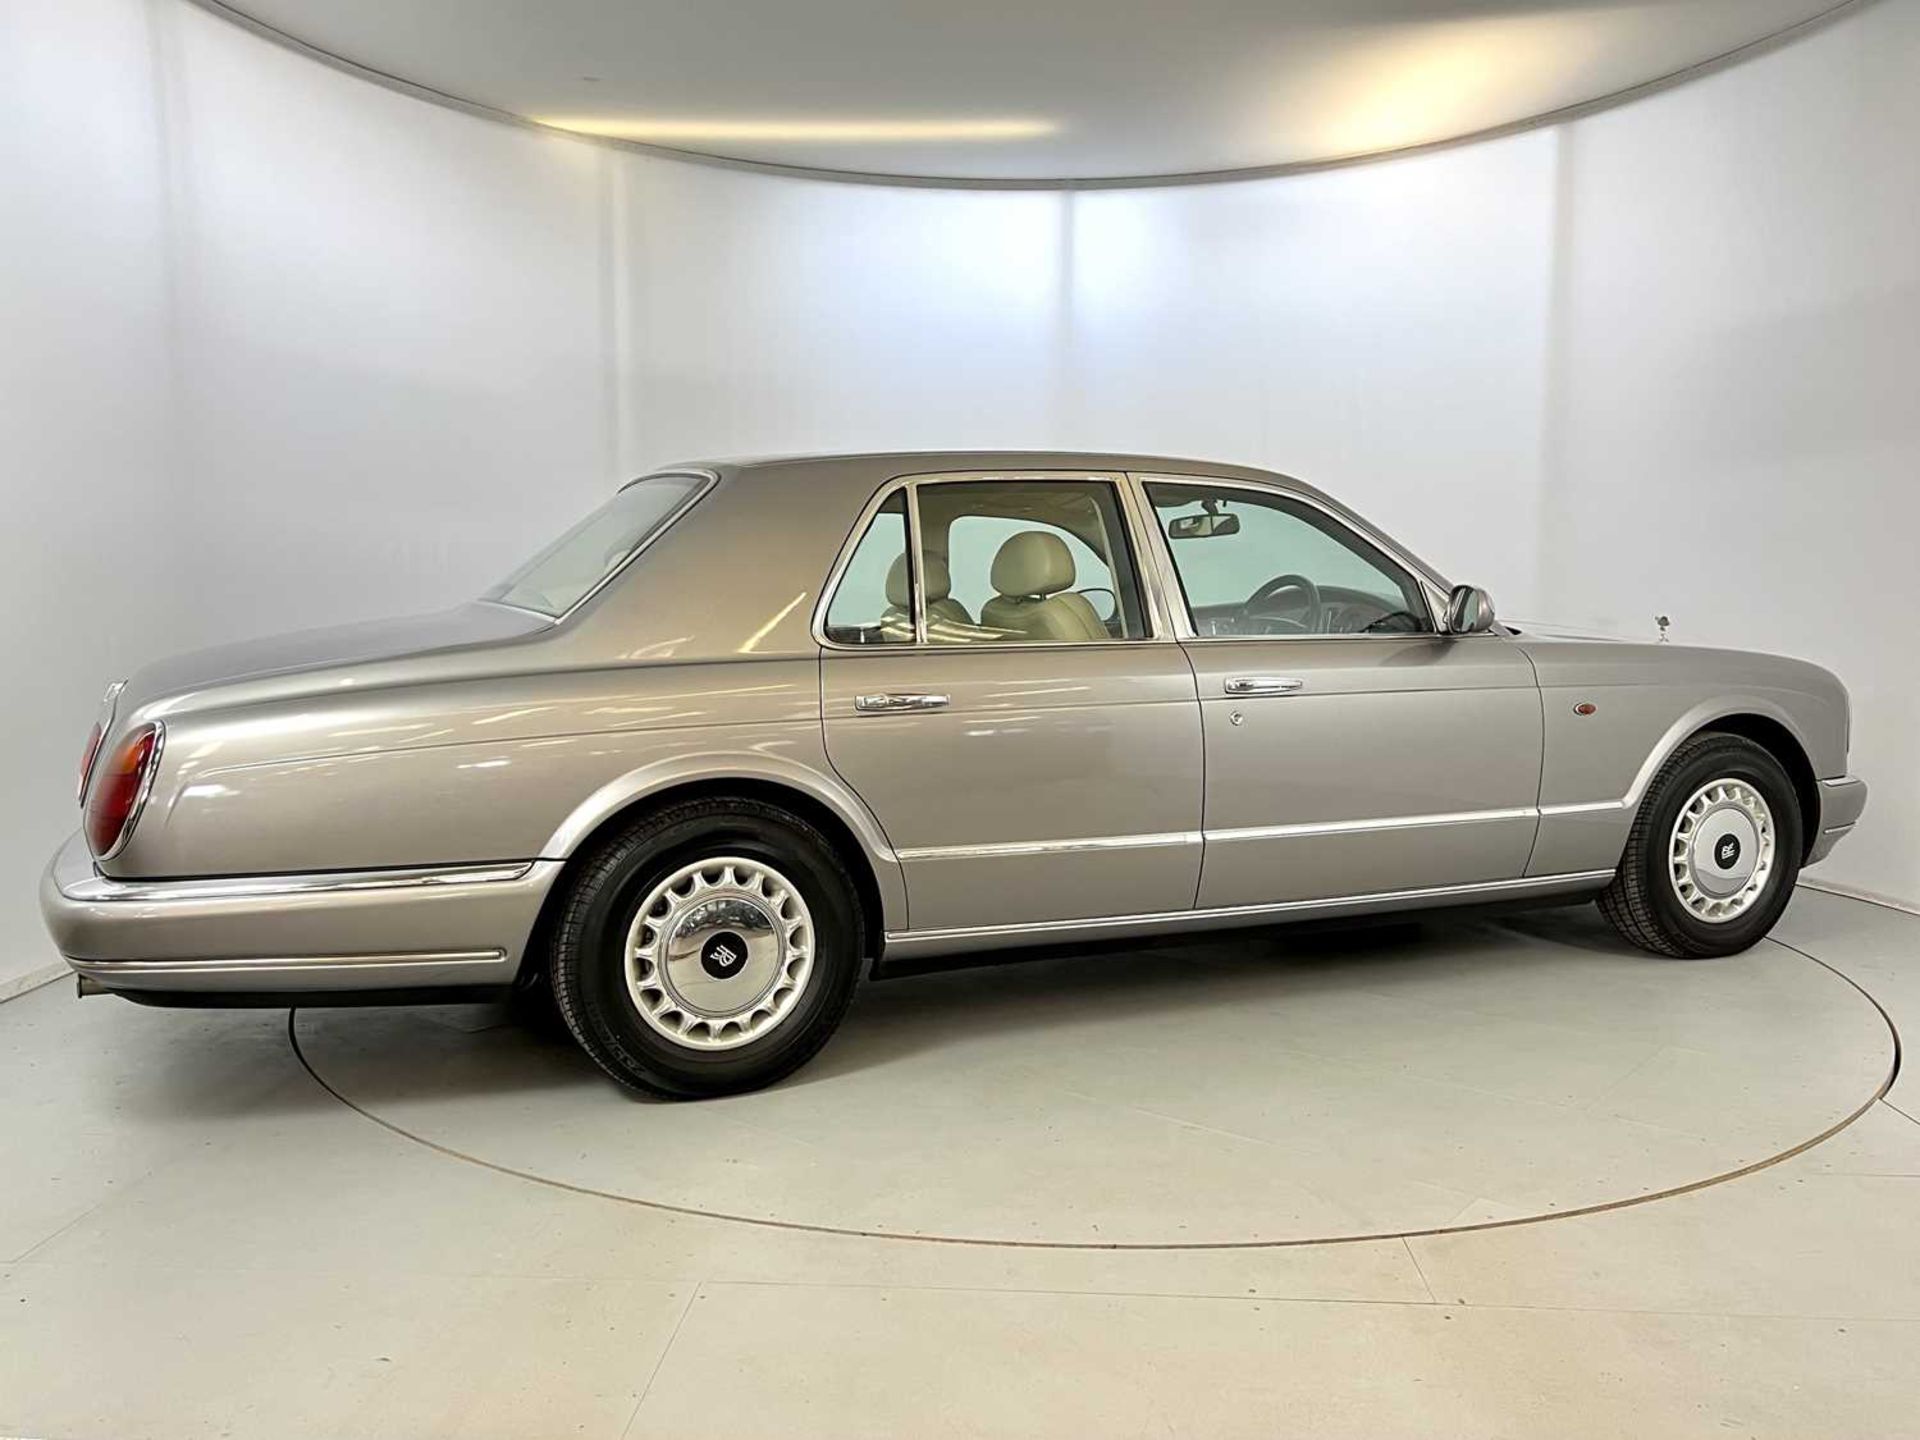 1999 Rolls Royce Silver Seraph - Image 10 of 38